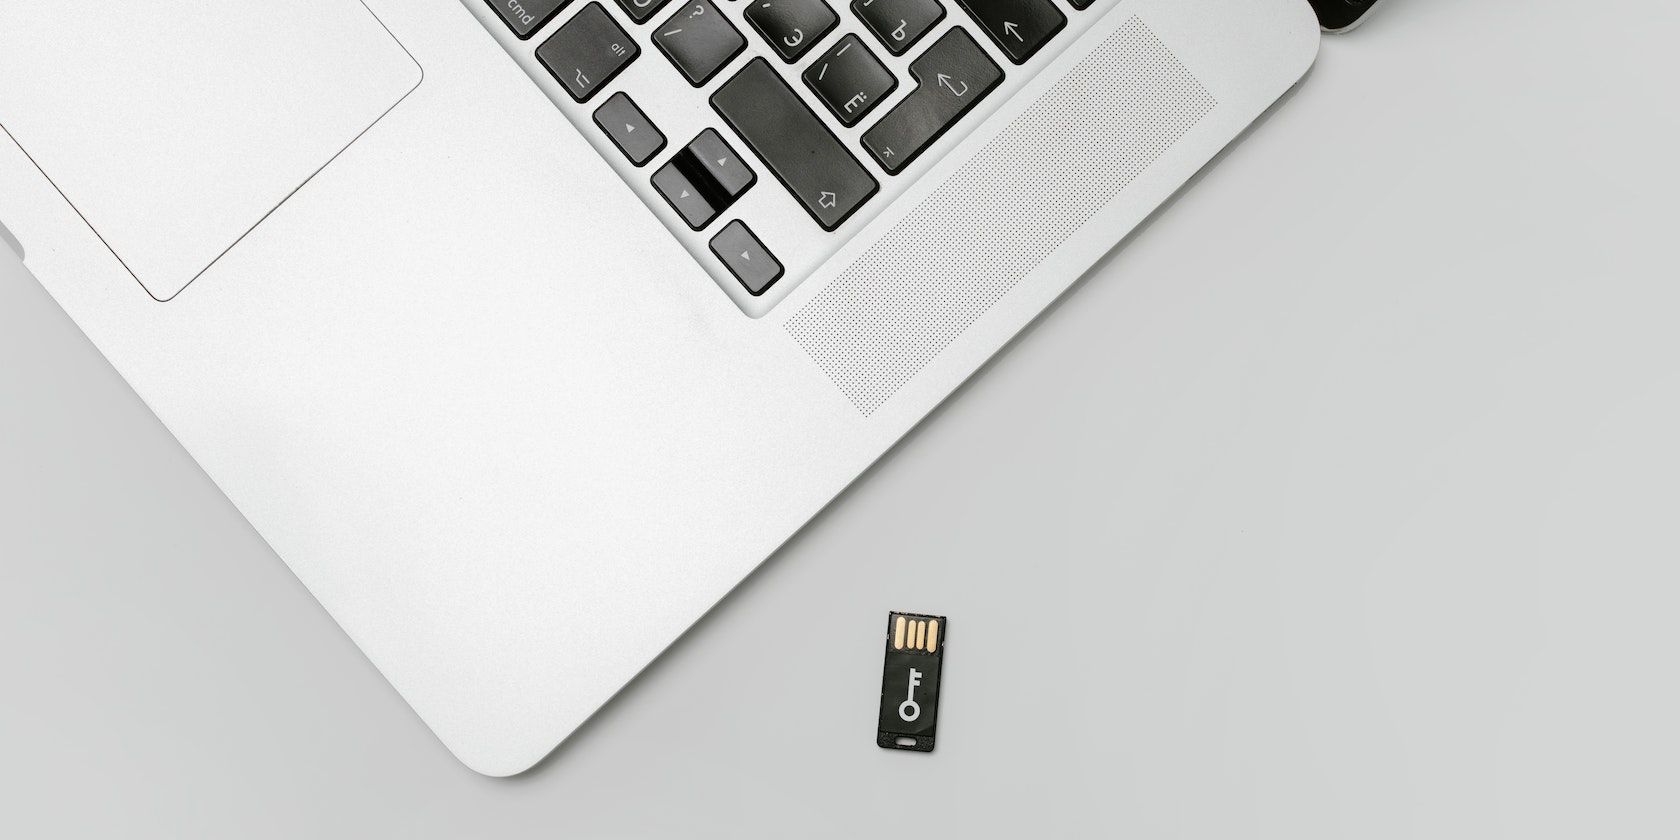 A memory card near a laptop